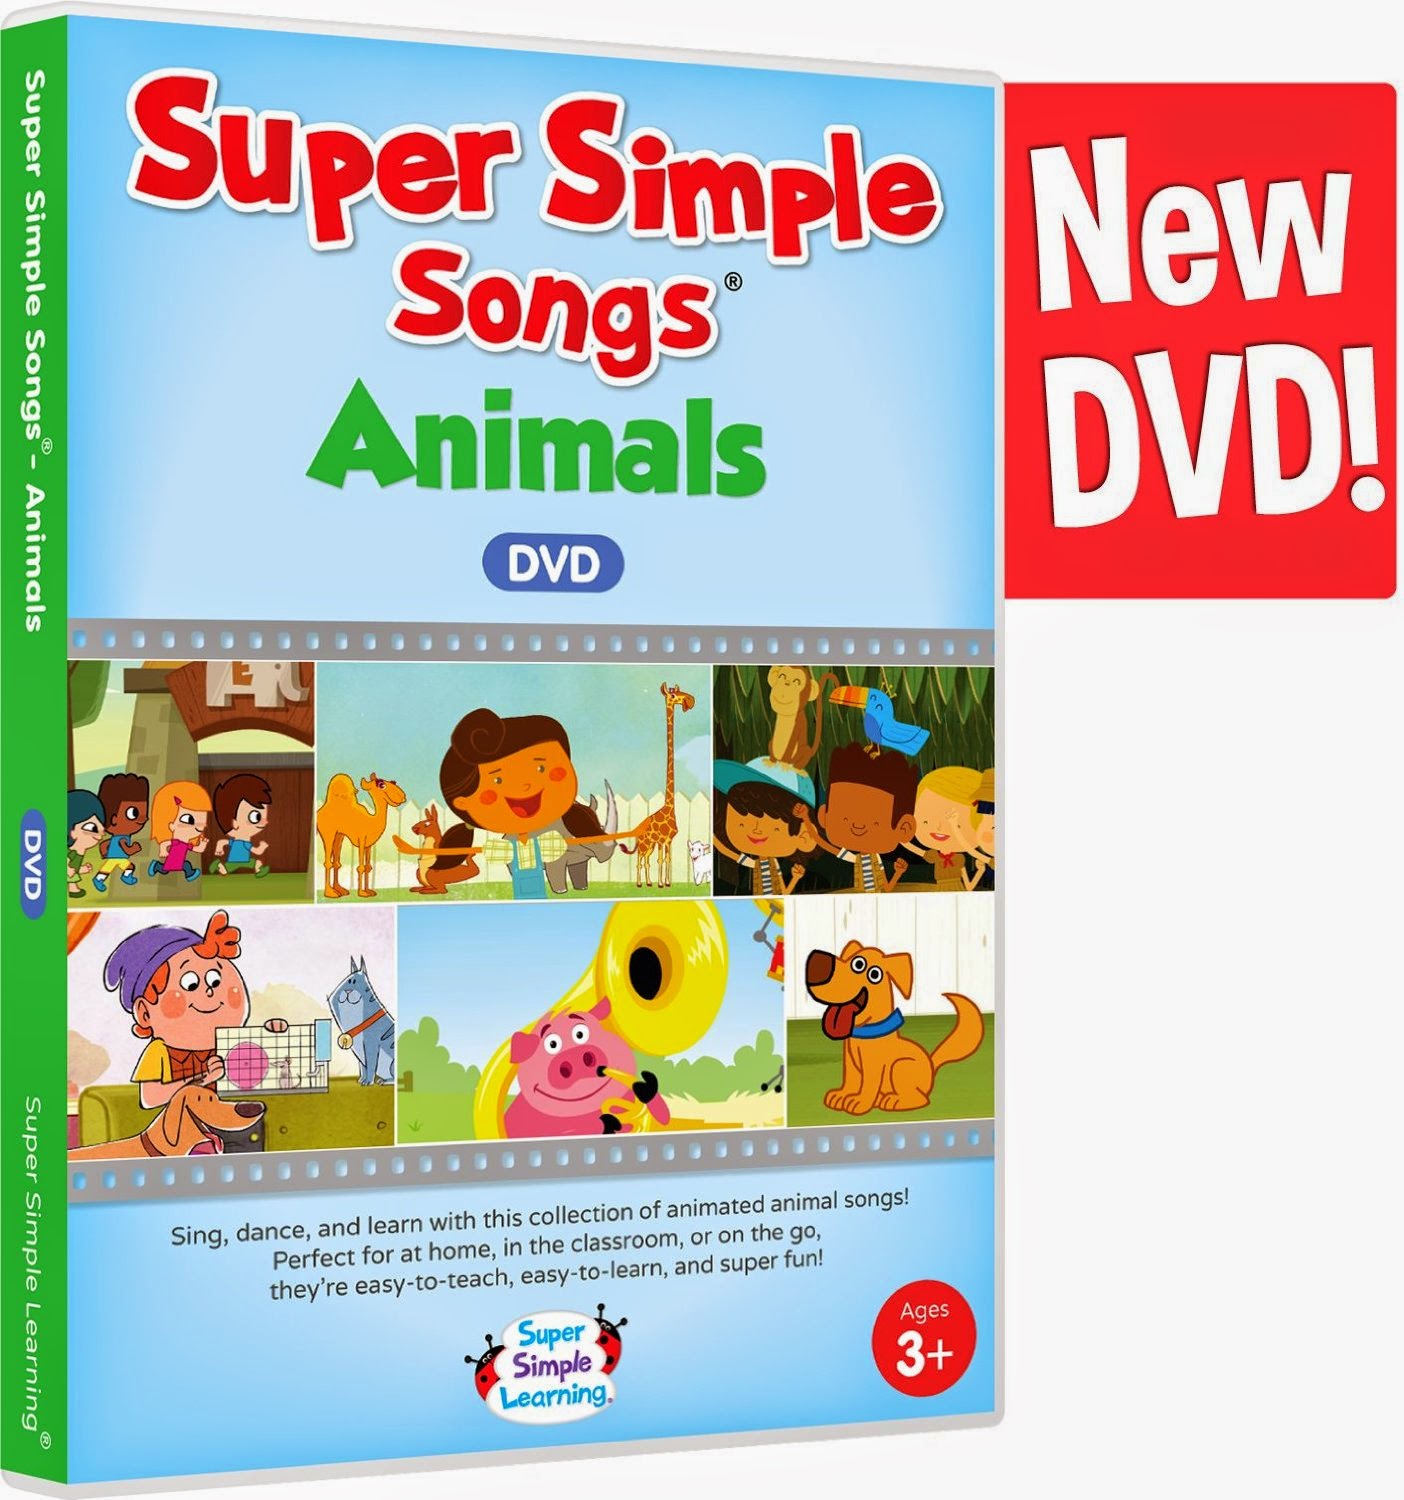 Simply learn. Супер Симпл Сонг. Super simple Songs. Super simple Songs animals. Simple Learning Songs.